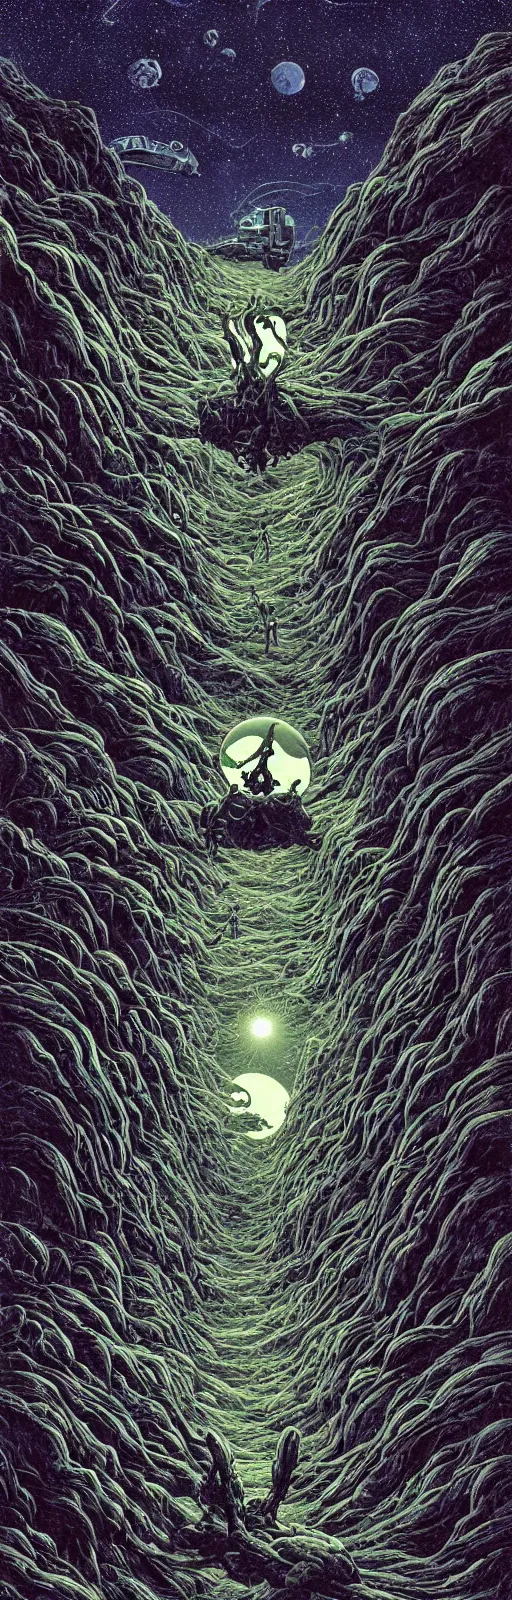 Prompt: long organic alien weird David cronenberg rocket train mountain starry moonlit night sky H.R. Giger, Charles Vess, Gilbert Williams amazing landscape digital art 4k